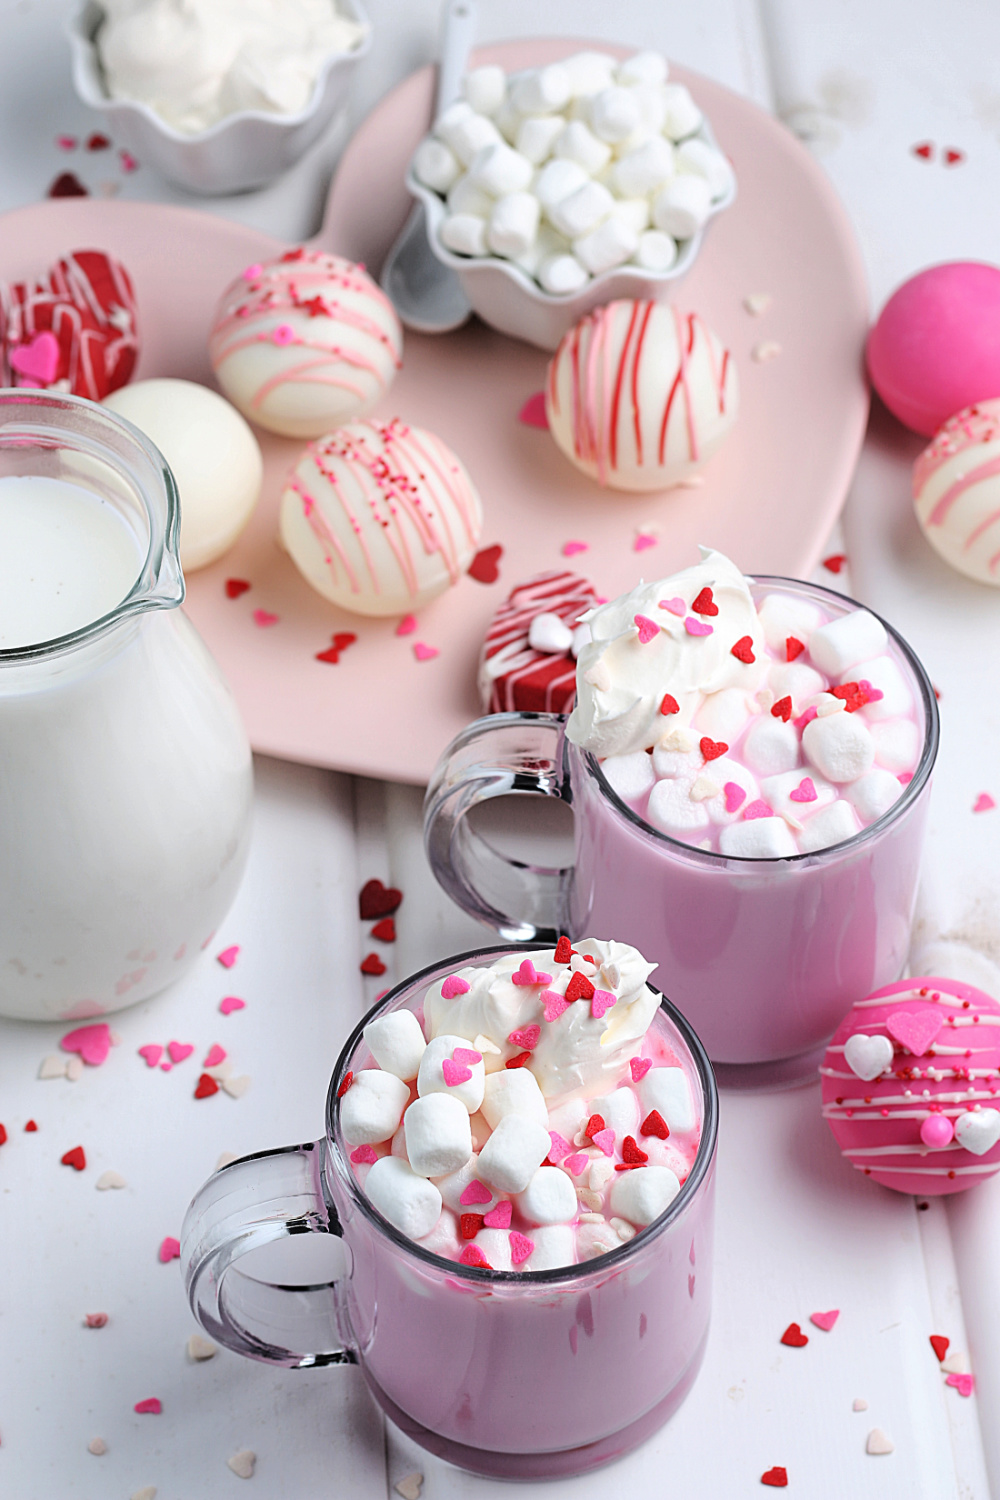 How to Make Valentine’s Hot Chocolate Bombs